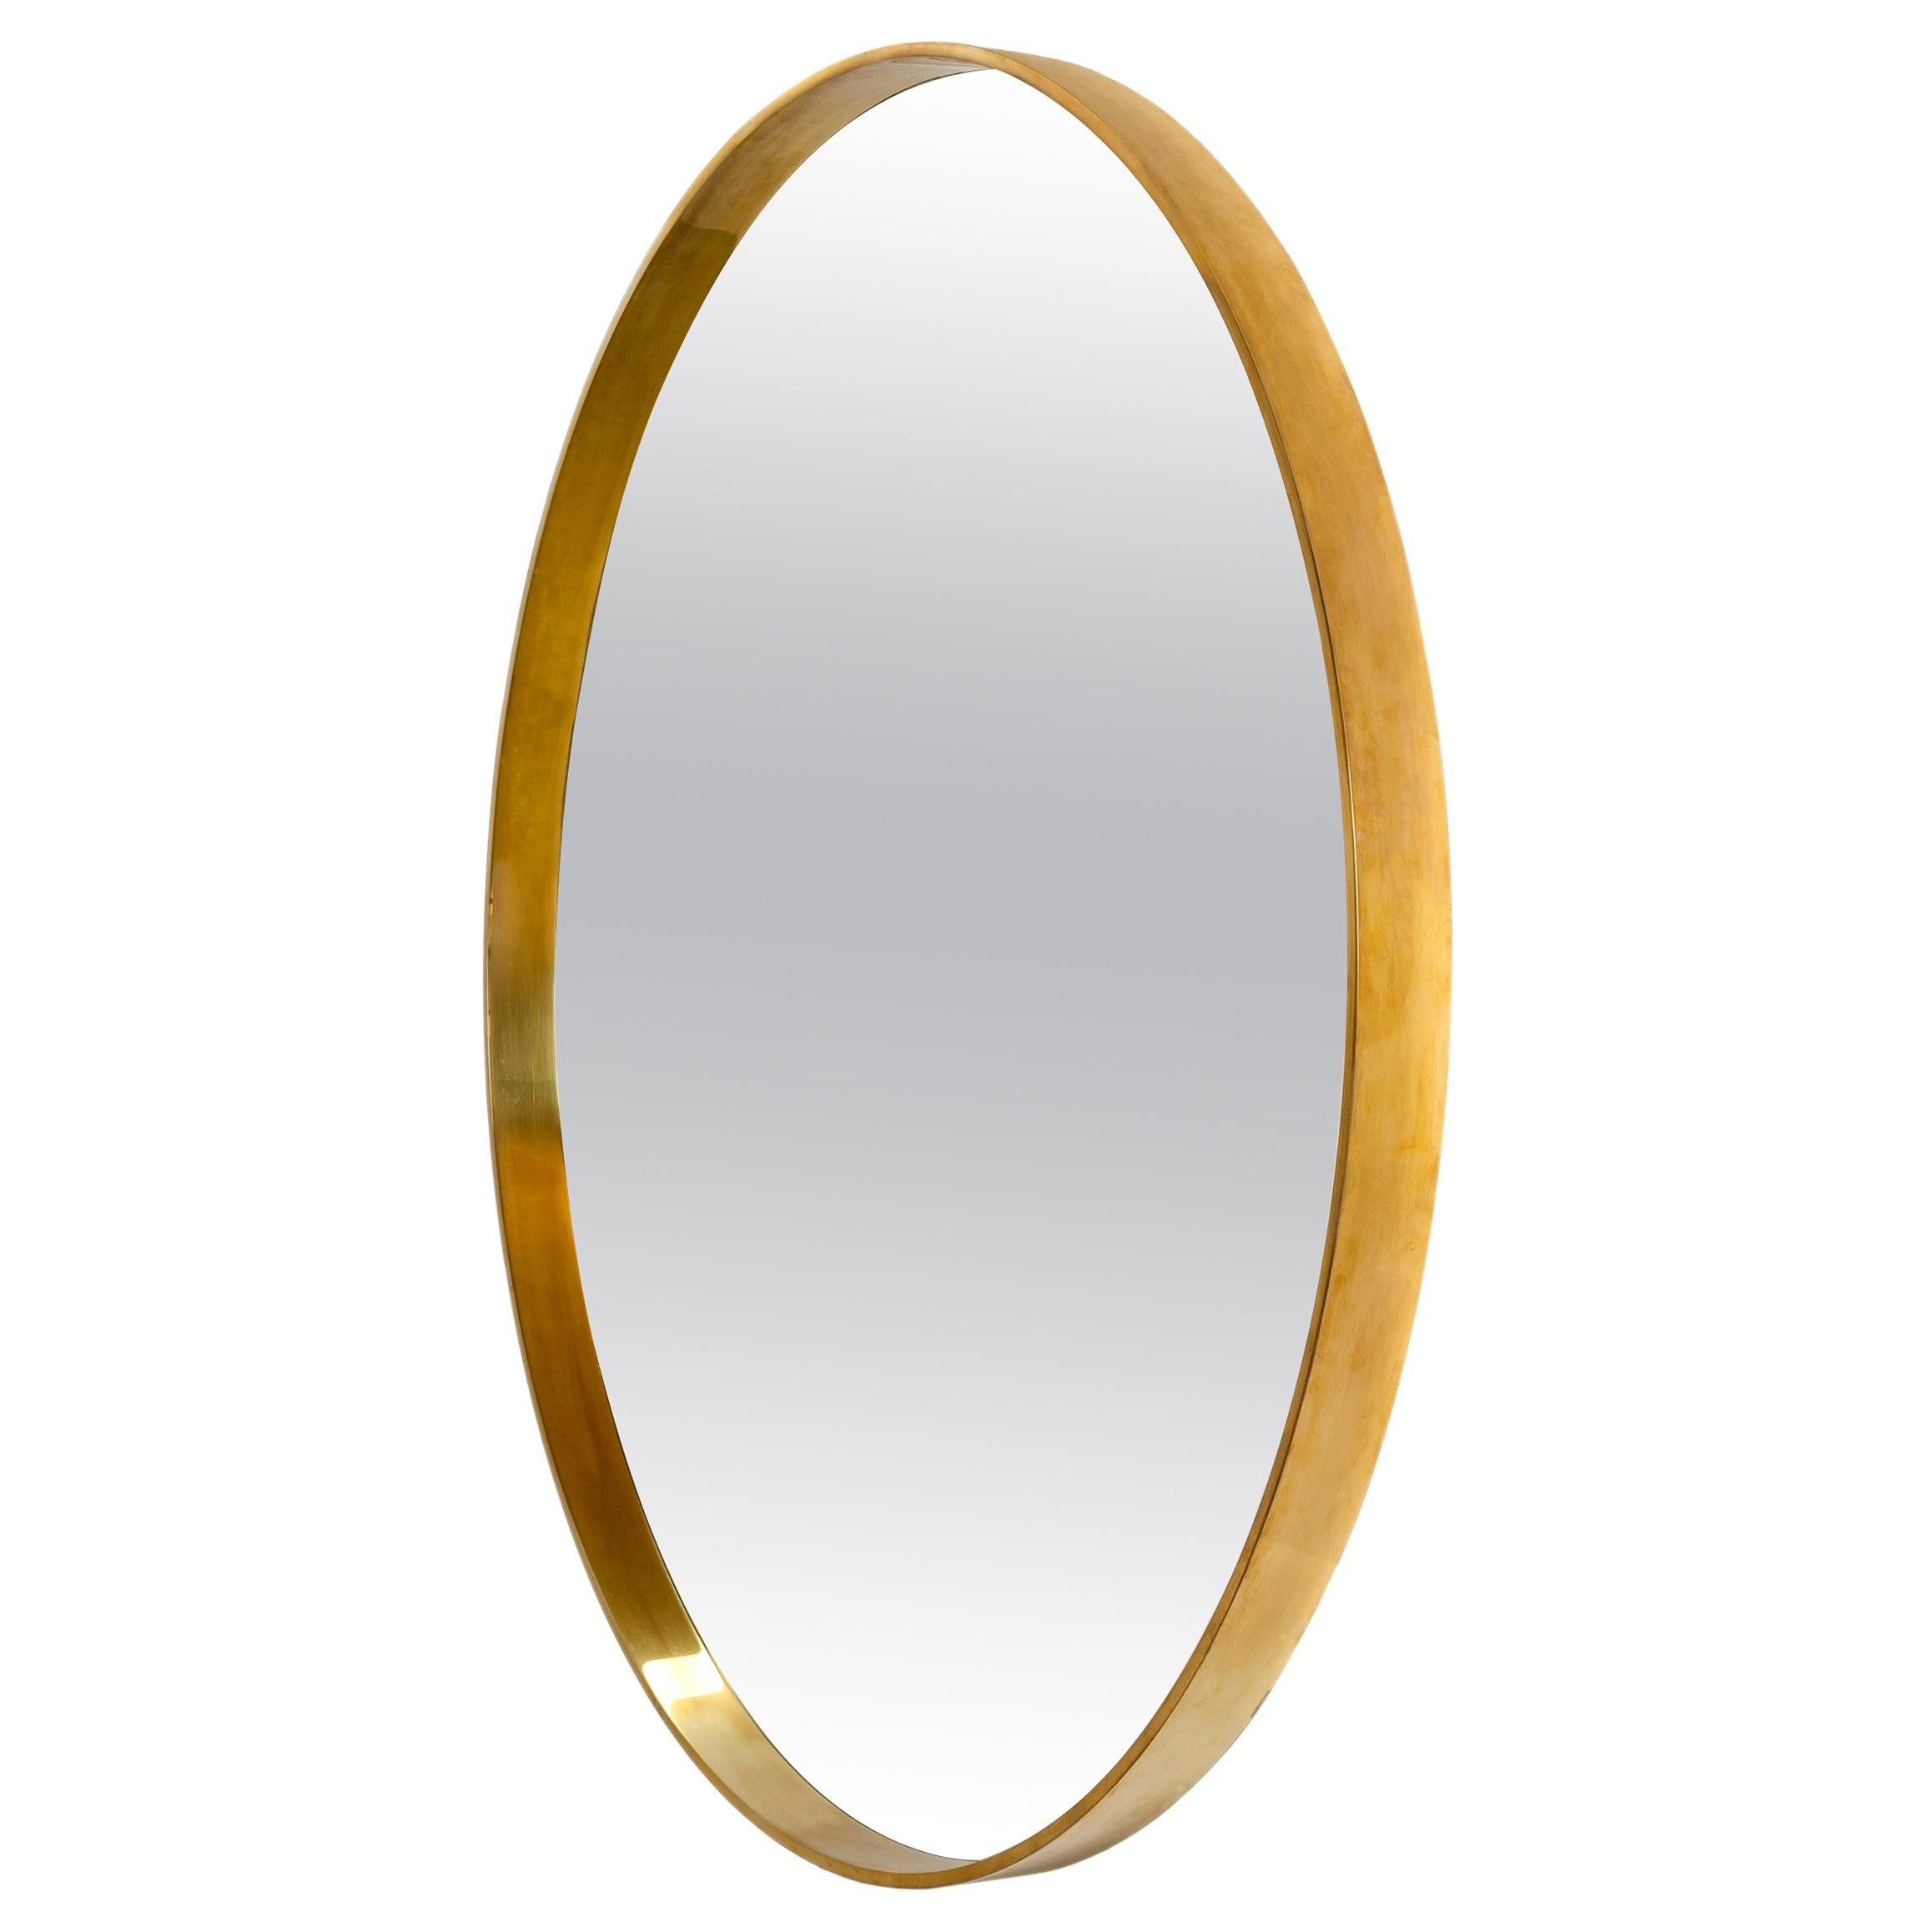 WYETH Original Round Mirror in Polished Bronze For Sale